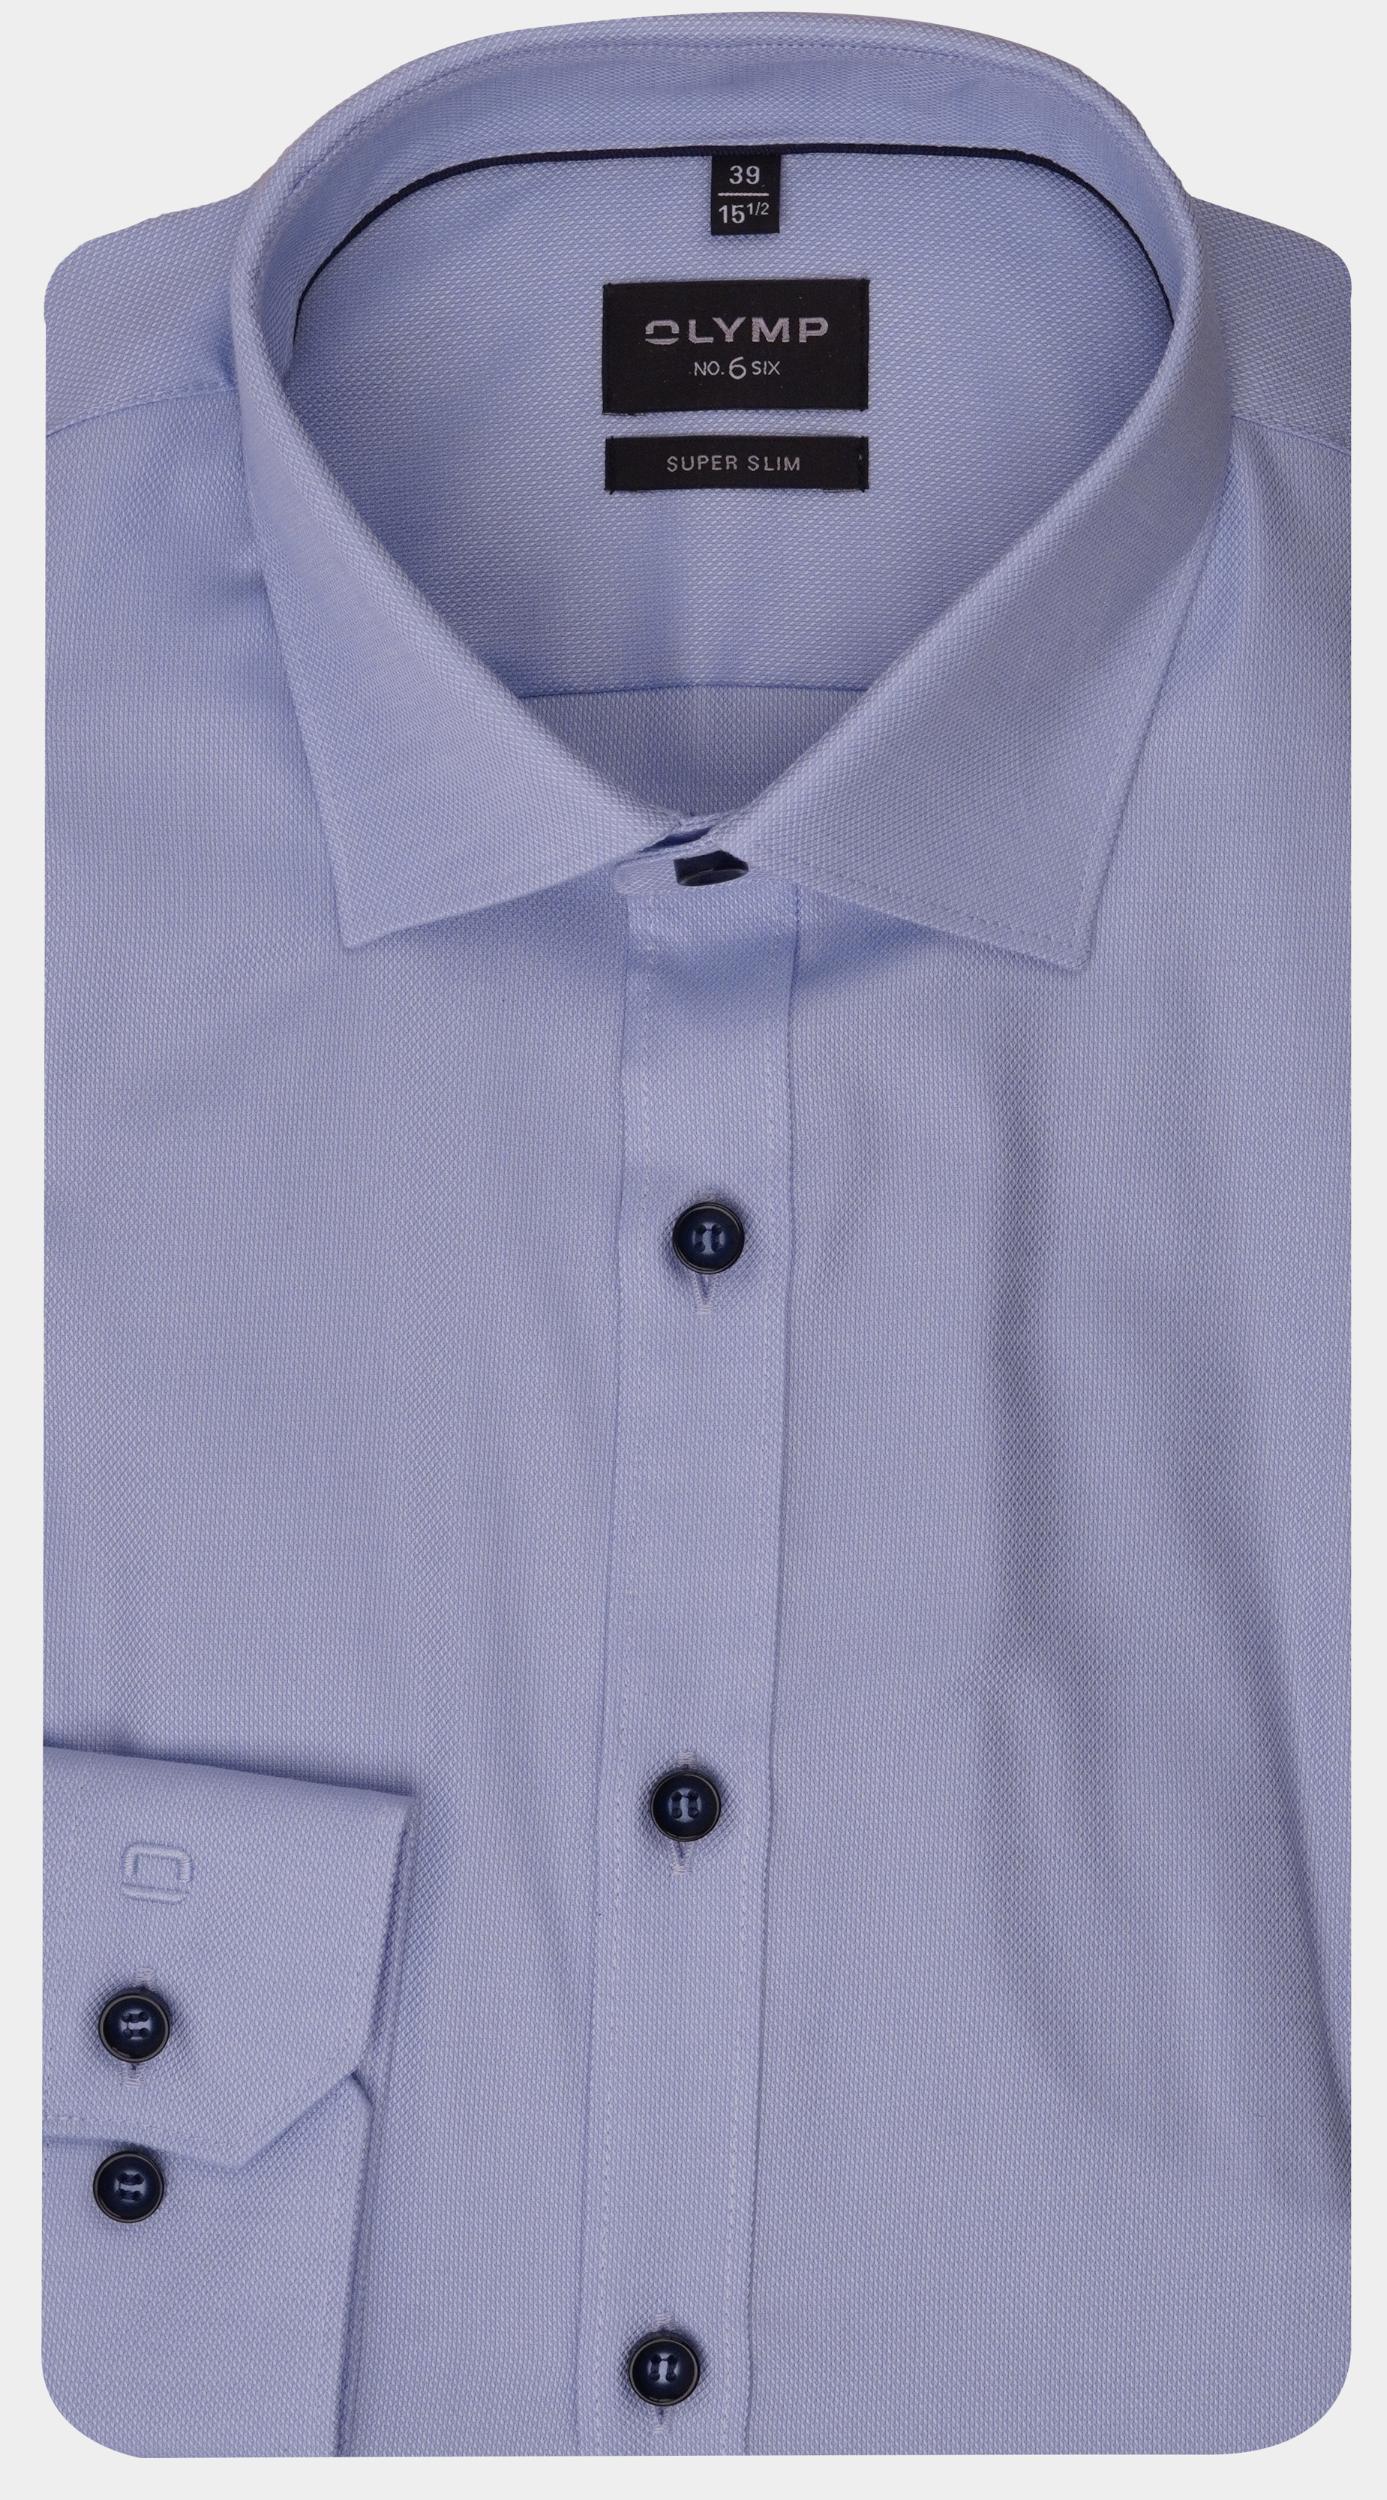 Olymp Business hemd lange mouw Blauw 251064-Hemden 251064/11